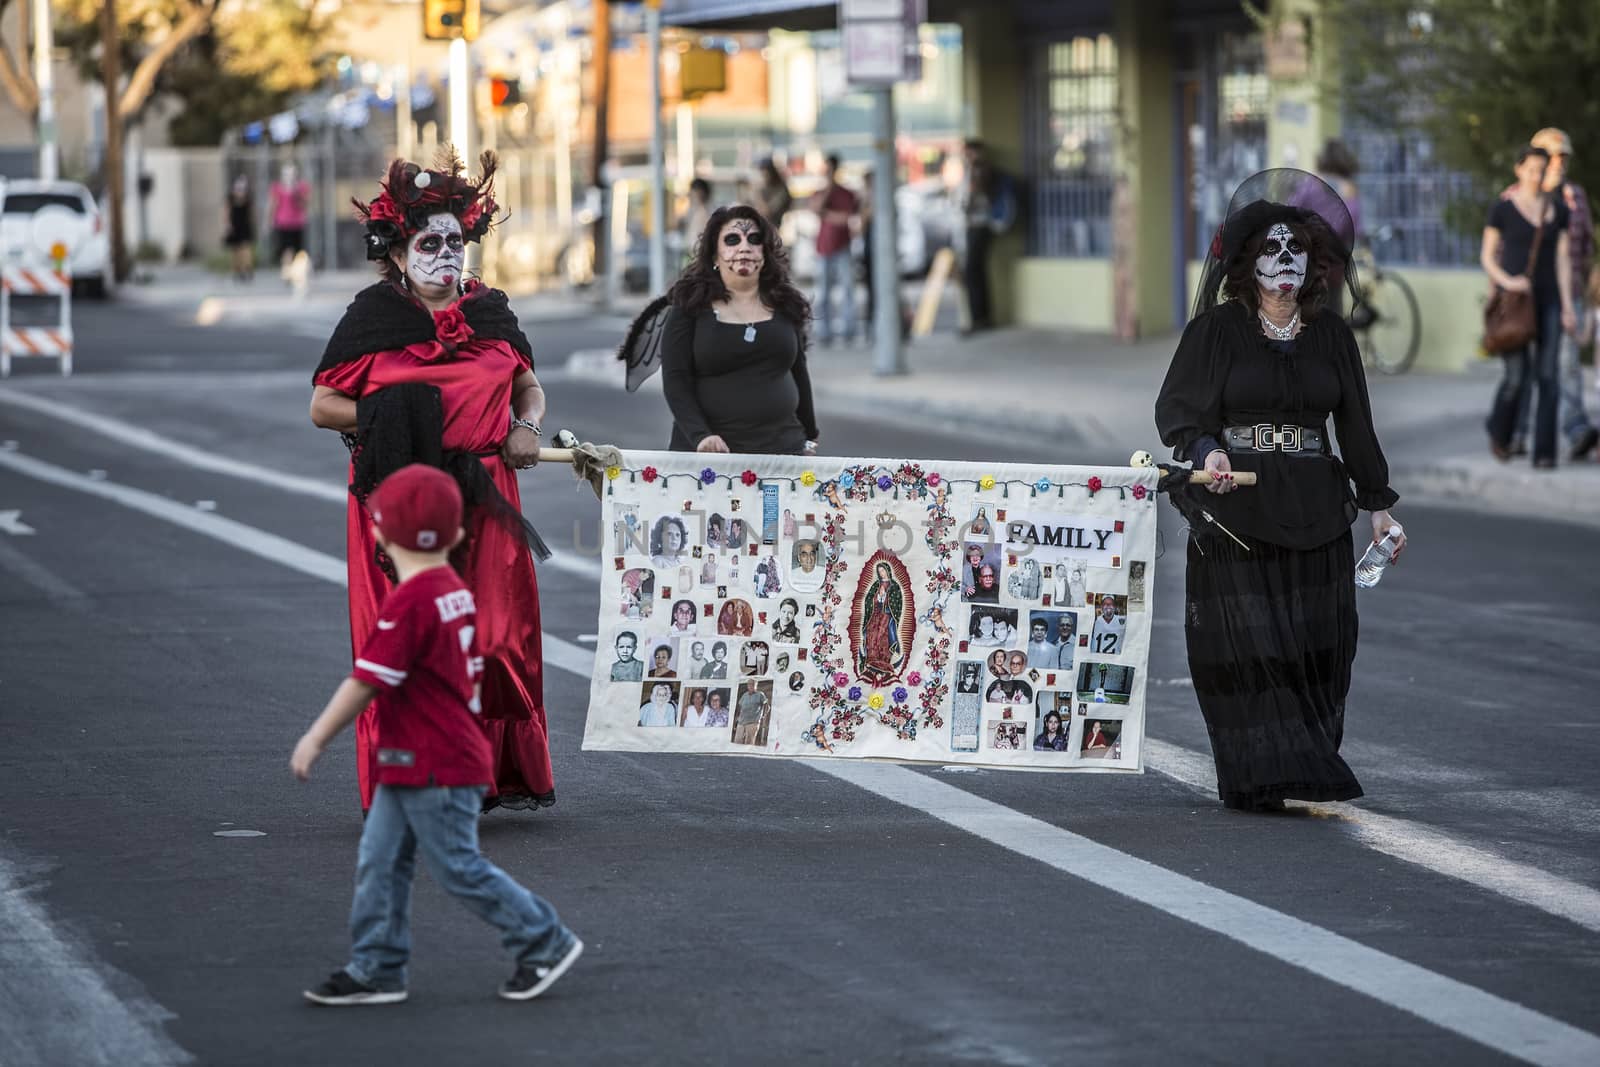 TUCSON, AZ/USA - NOVEMBER 09: Three undientified women walking in the All Souls Procession on November 09, 2014 in Tucson, AZ, USA.